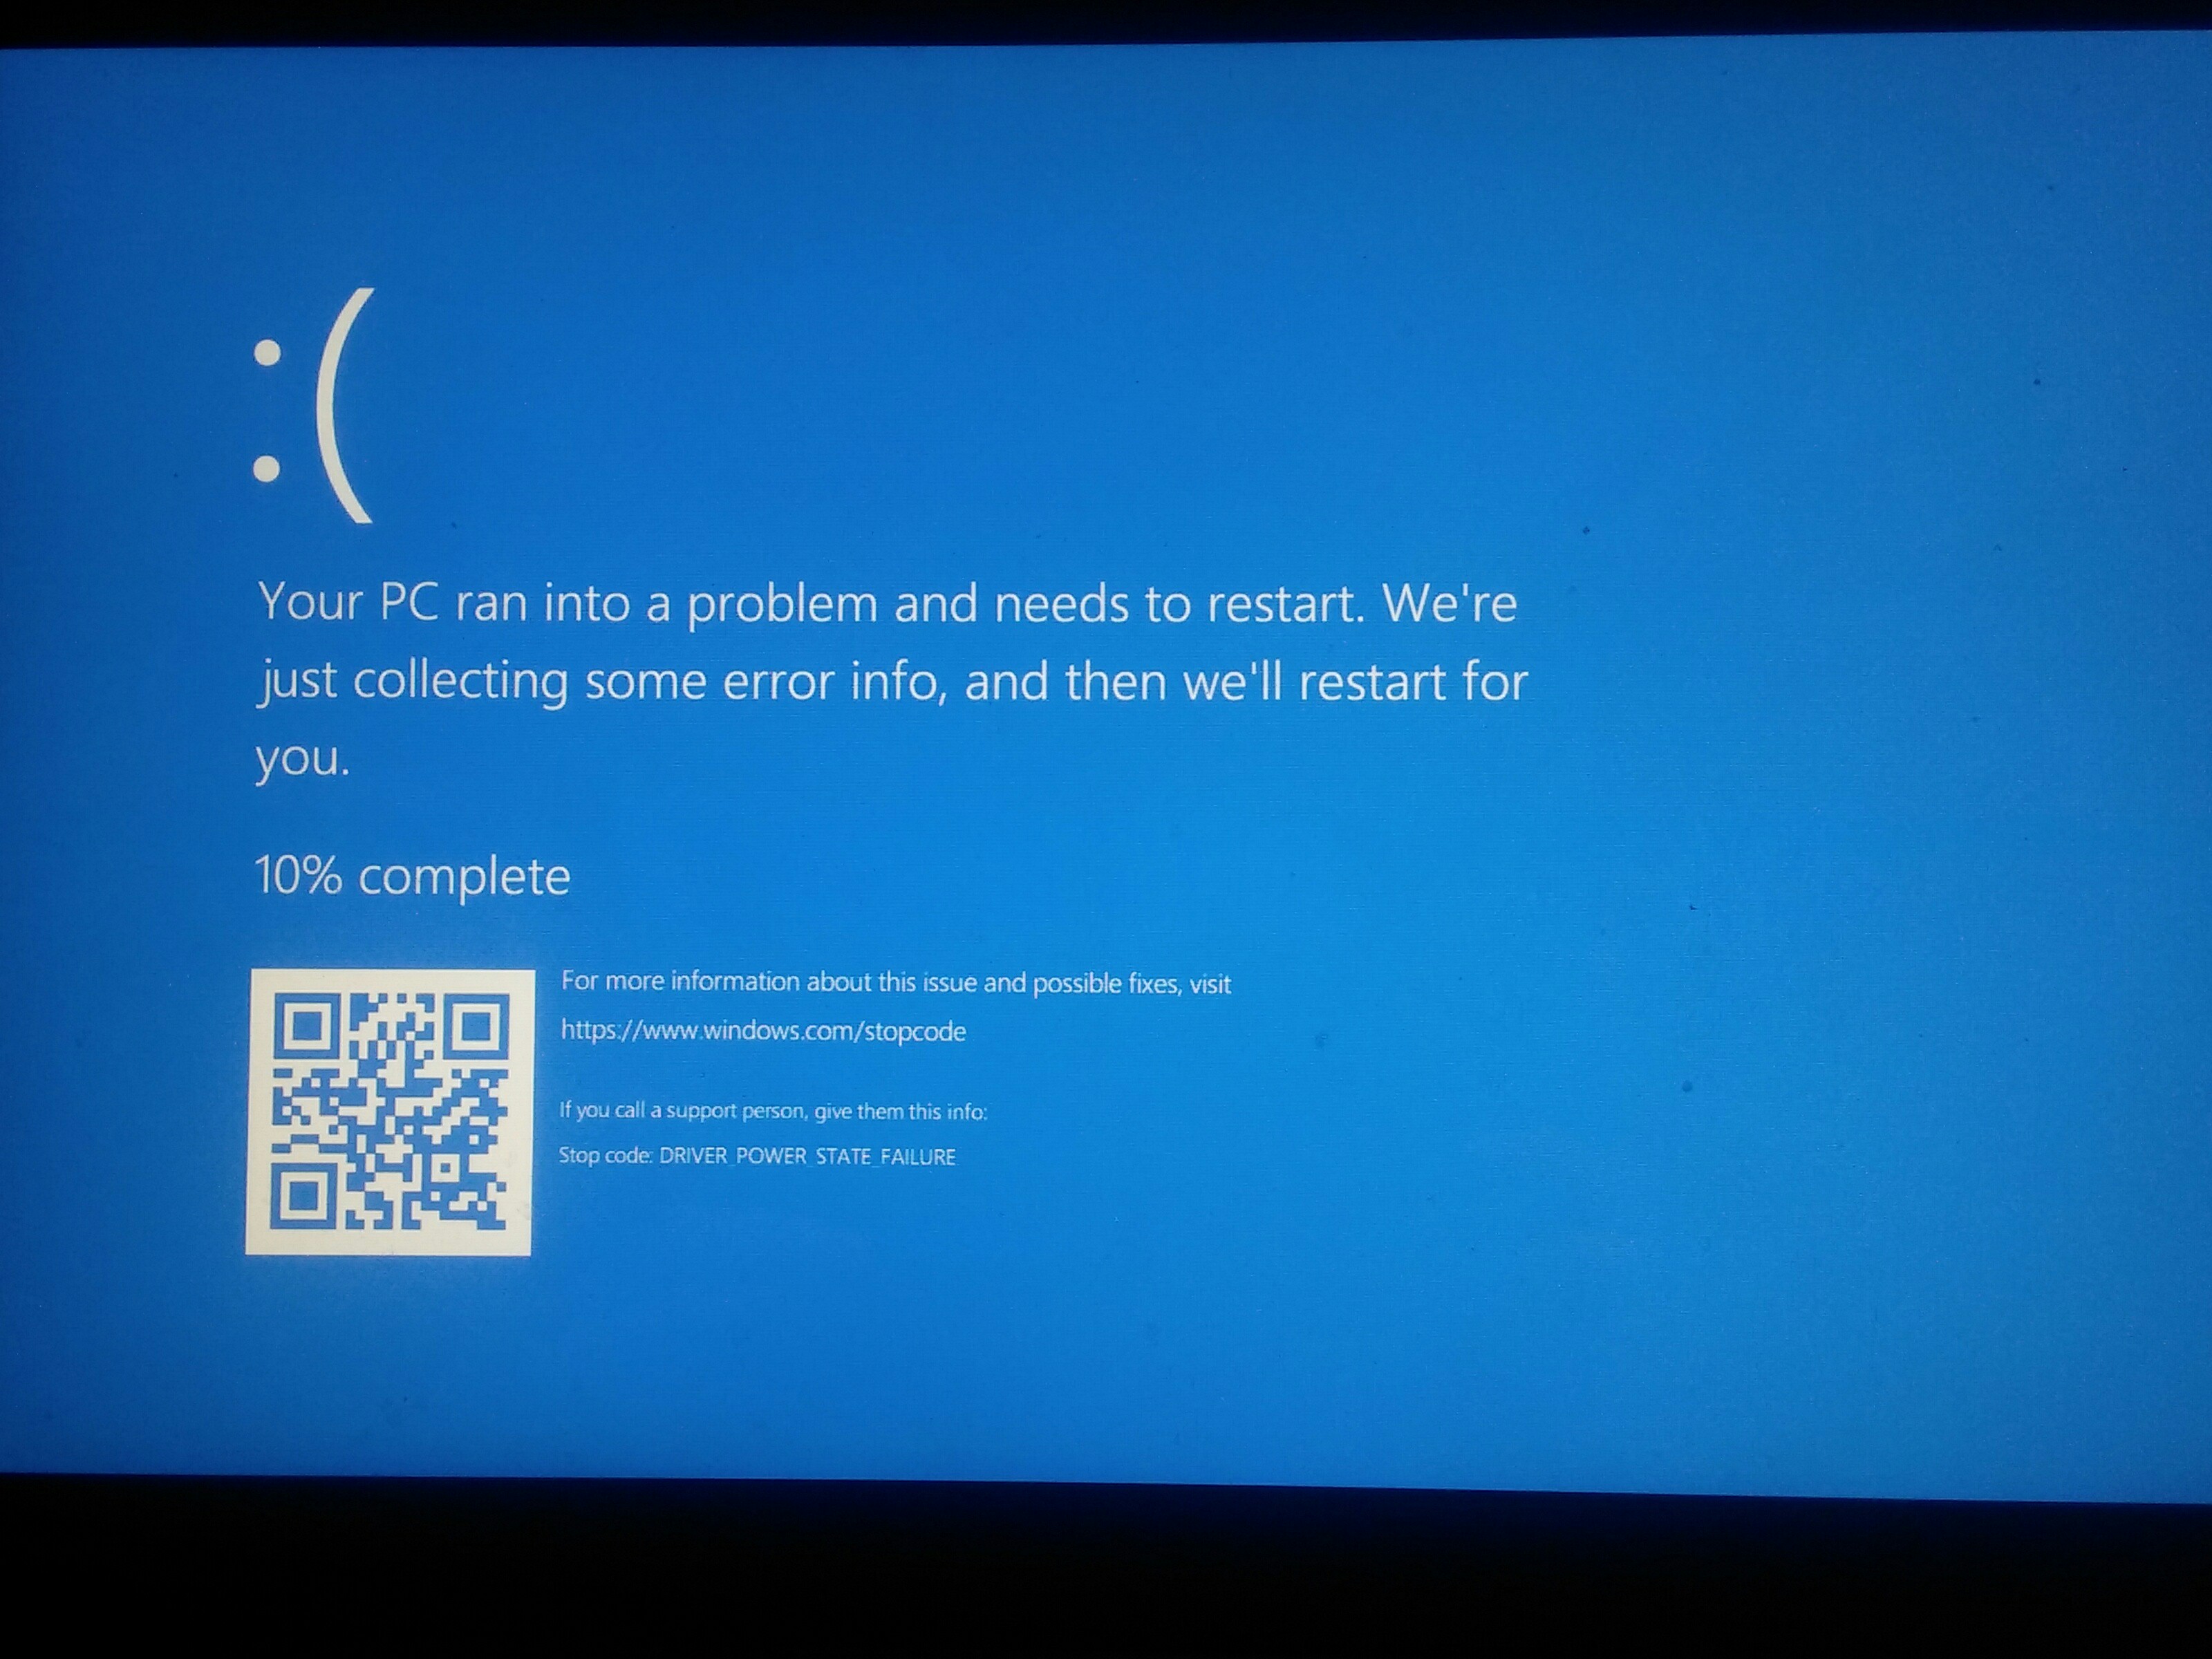 Windows 10 Keeps On Crashing After Update - Microsoft Community